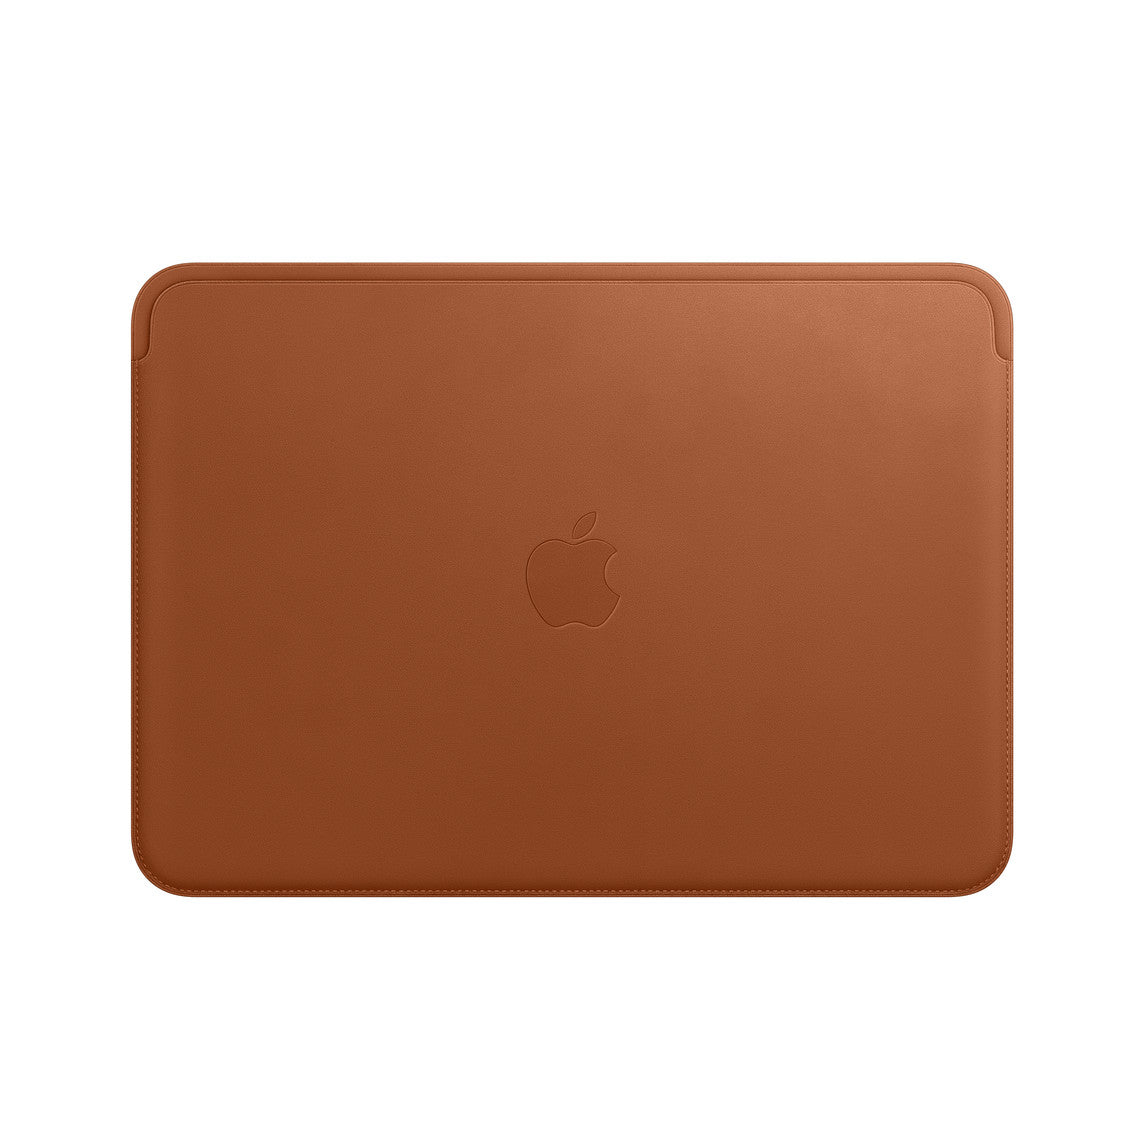 Apple MacBook Pro 12 Leather Sleeve - Brown Brown New - Sealed